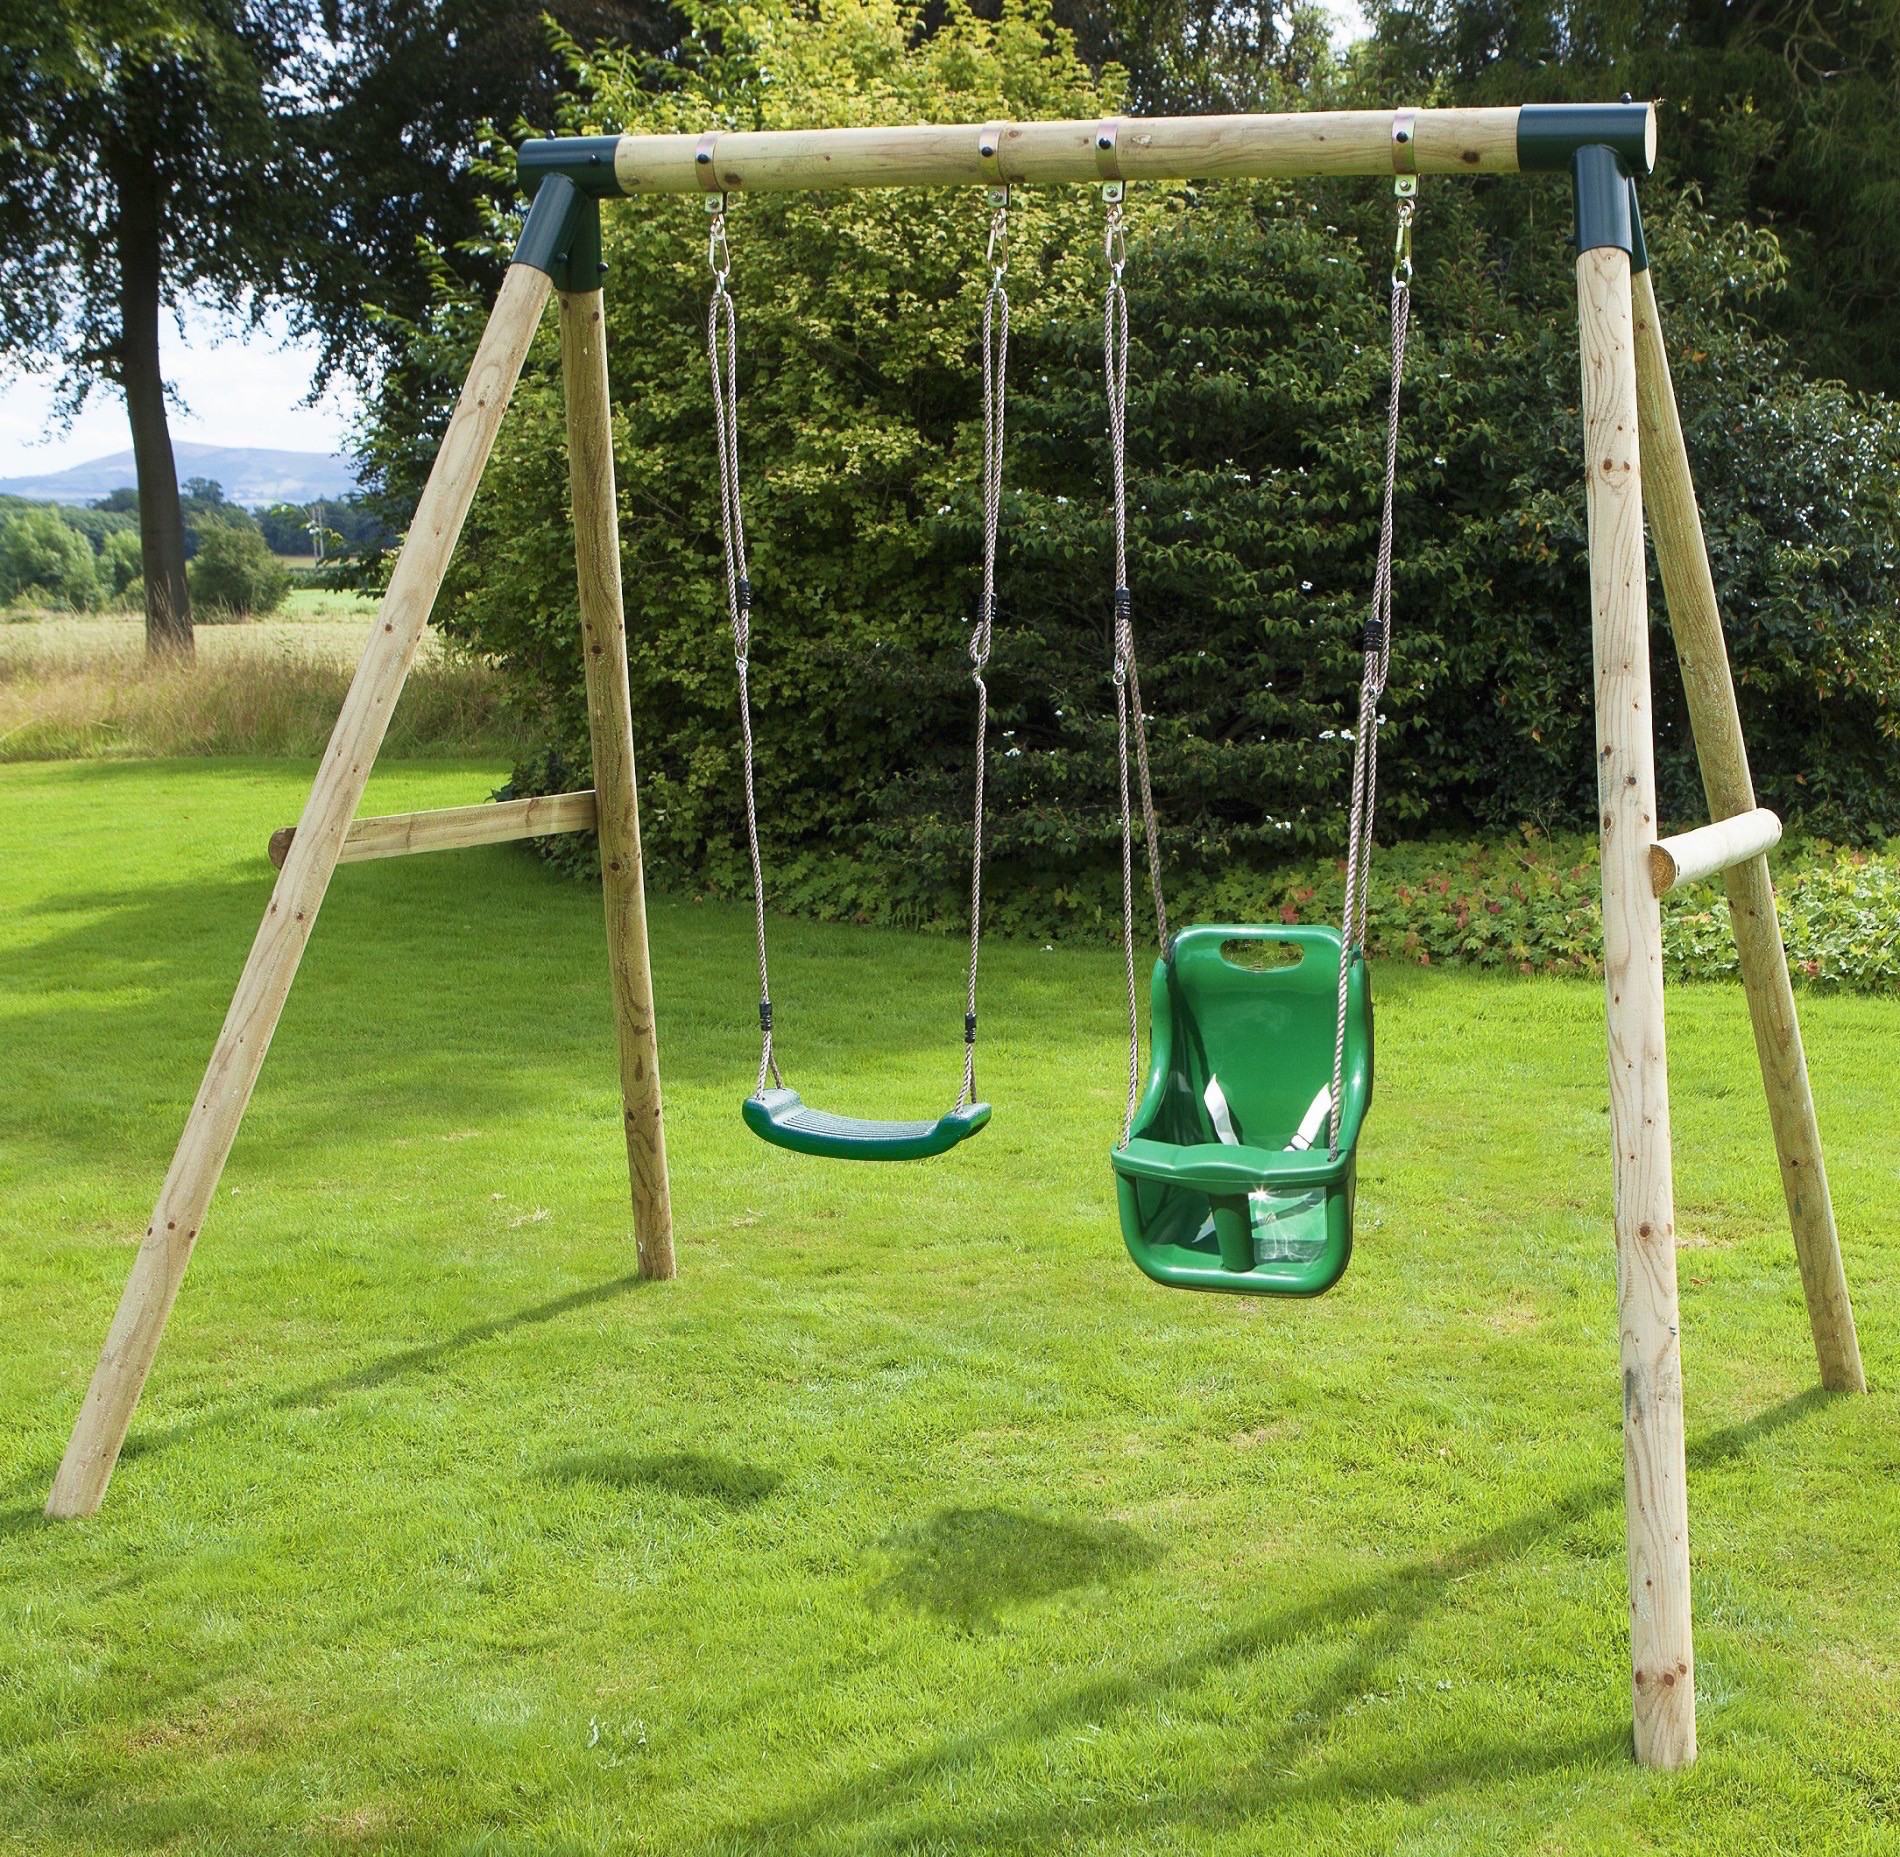 Wooden Swing For Kids
 Rebo Children s Wooden Garden Swing Sets Single Baby